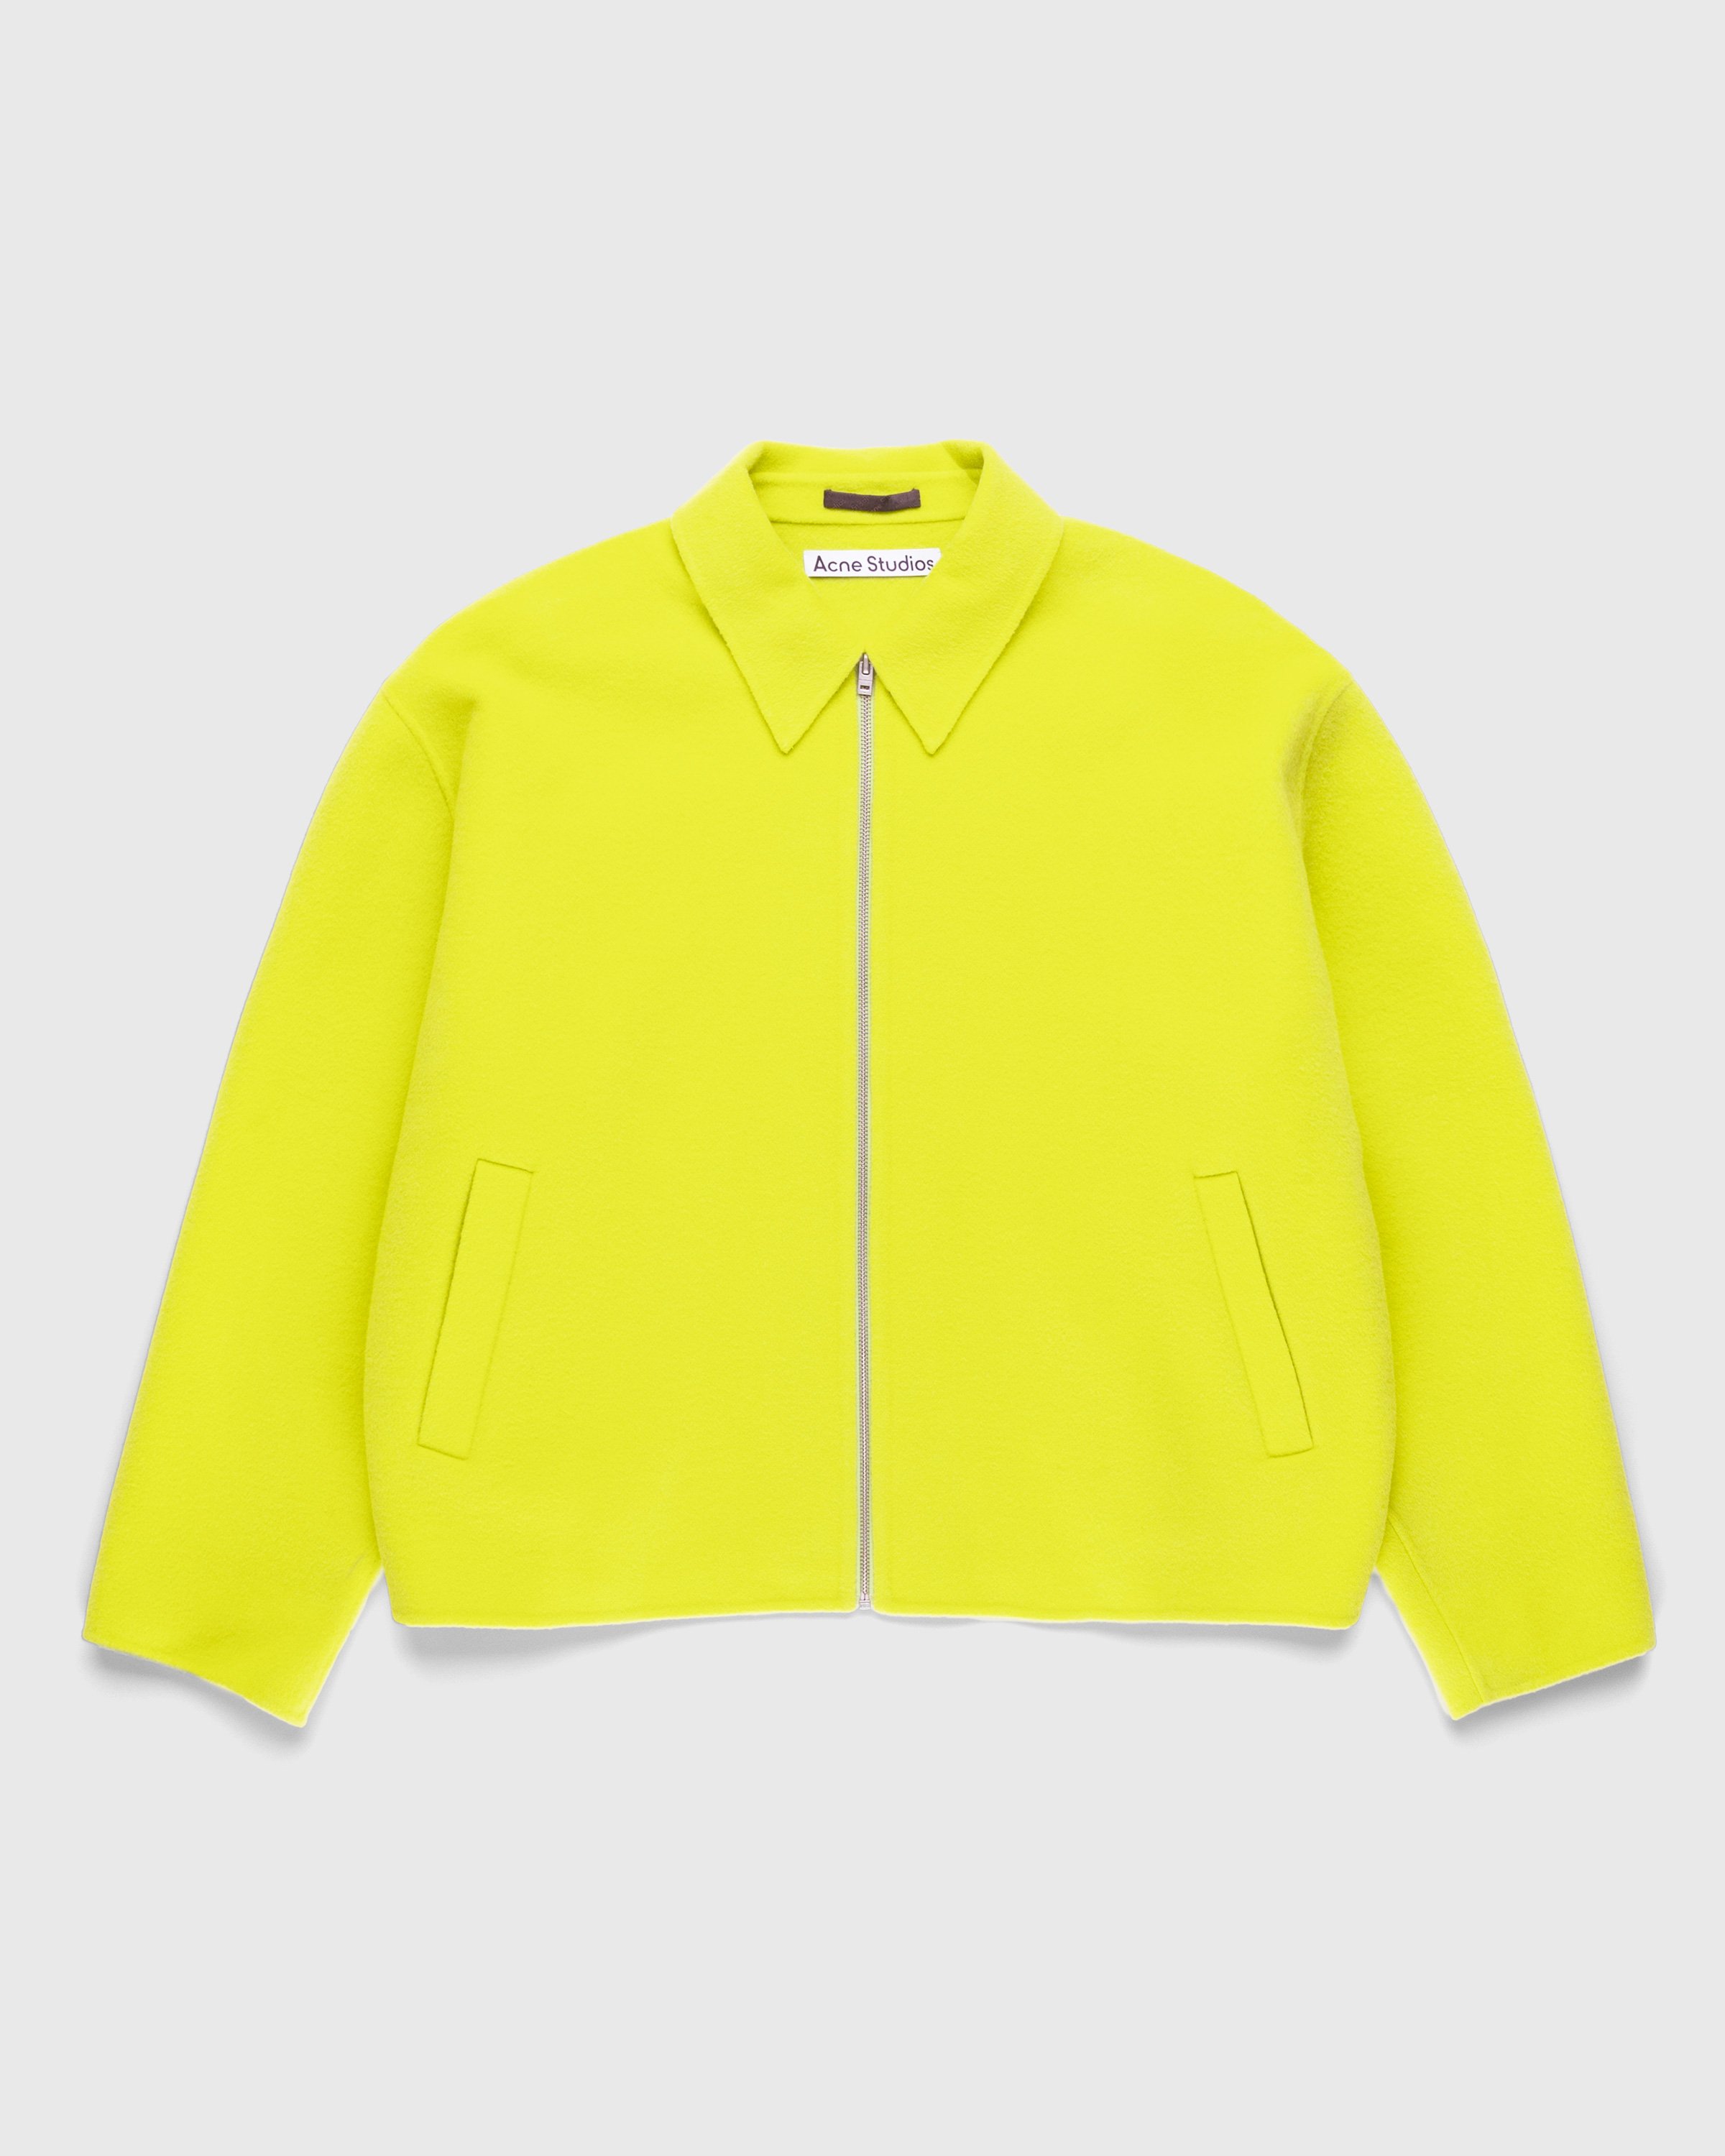 Acne Studios – Wool Zipper Jacket Lime Green | Highsnobiety Shop